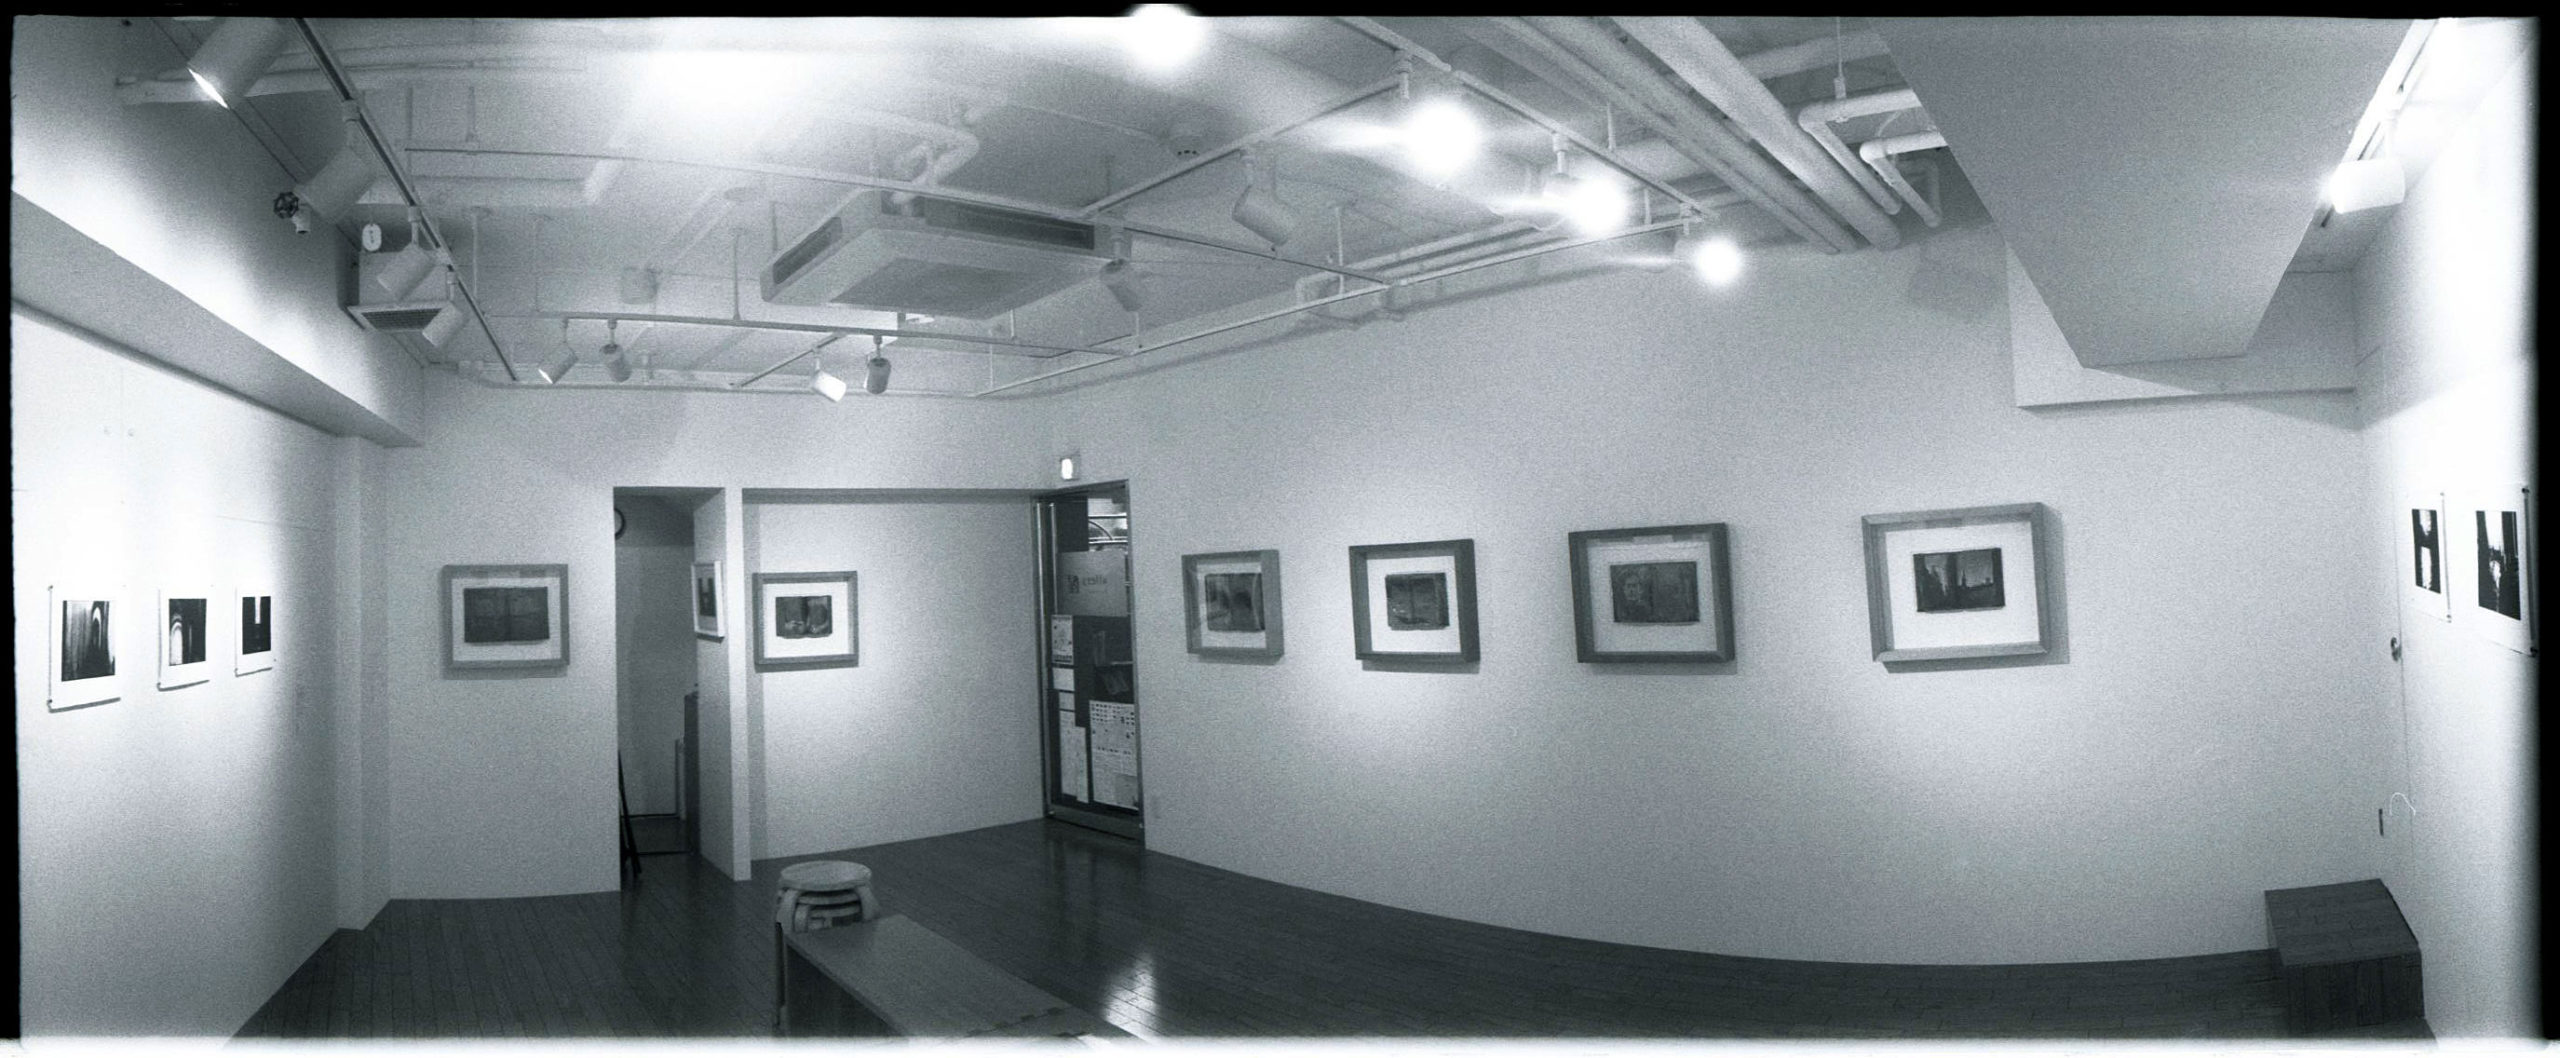 個展会場の展示1 2004年9月 Gallery惺 